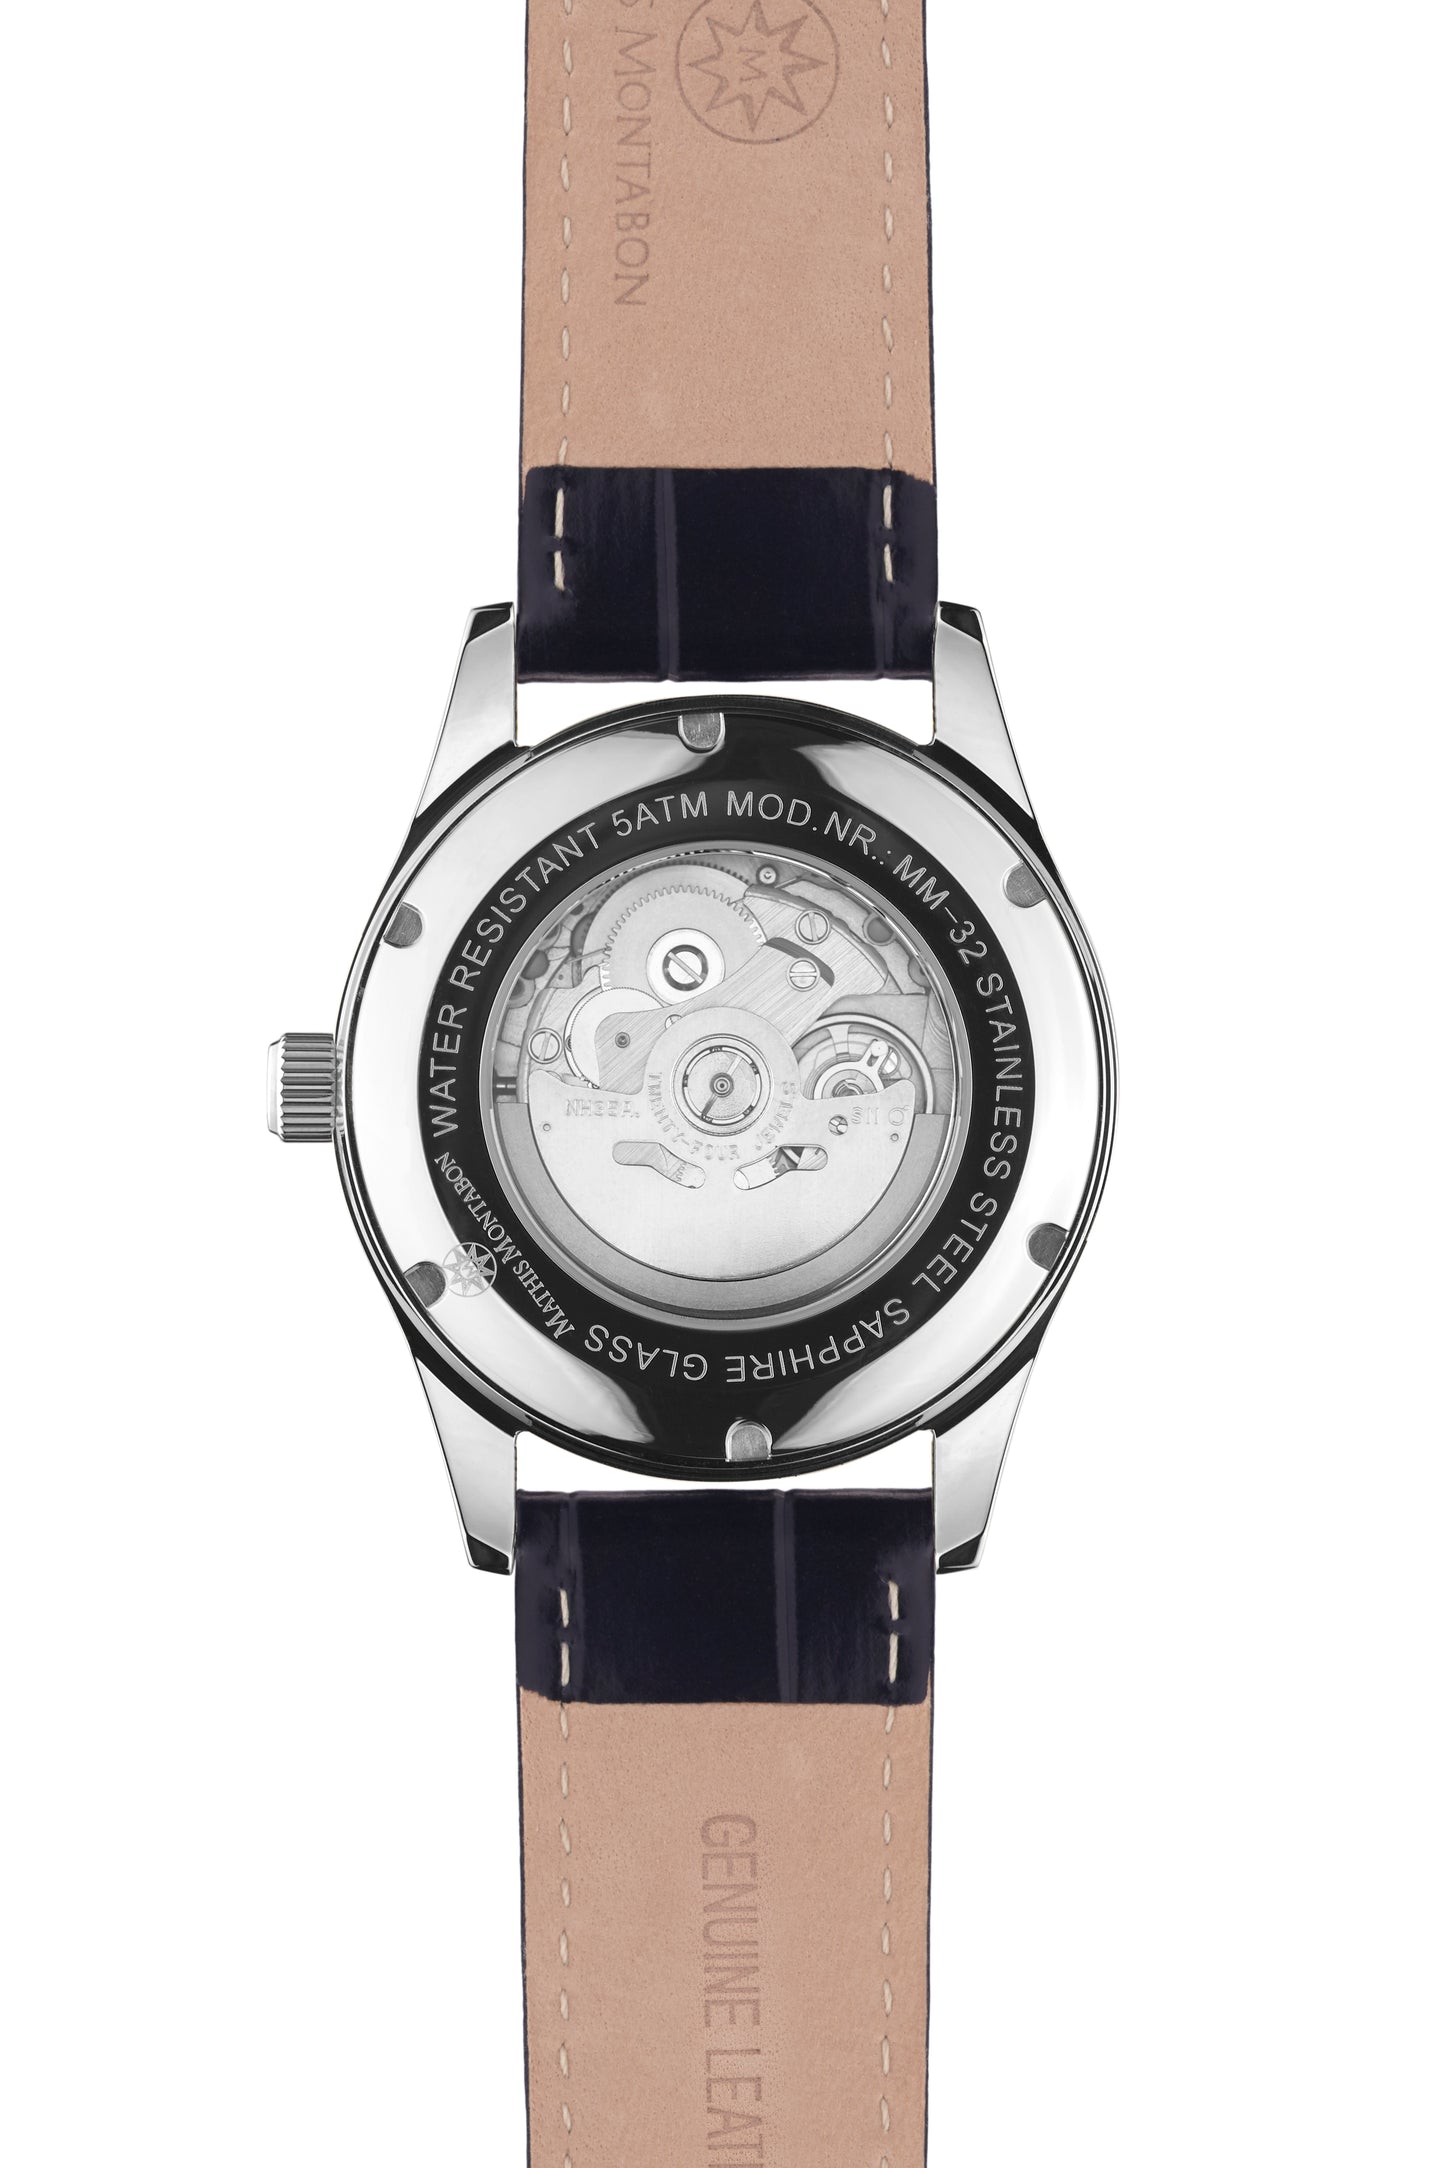 Automatic watches — Héritage — Mathis Montabon — schwarz Leder